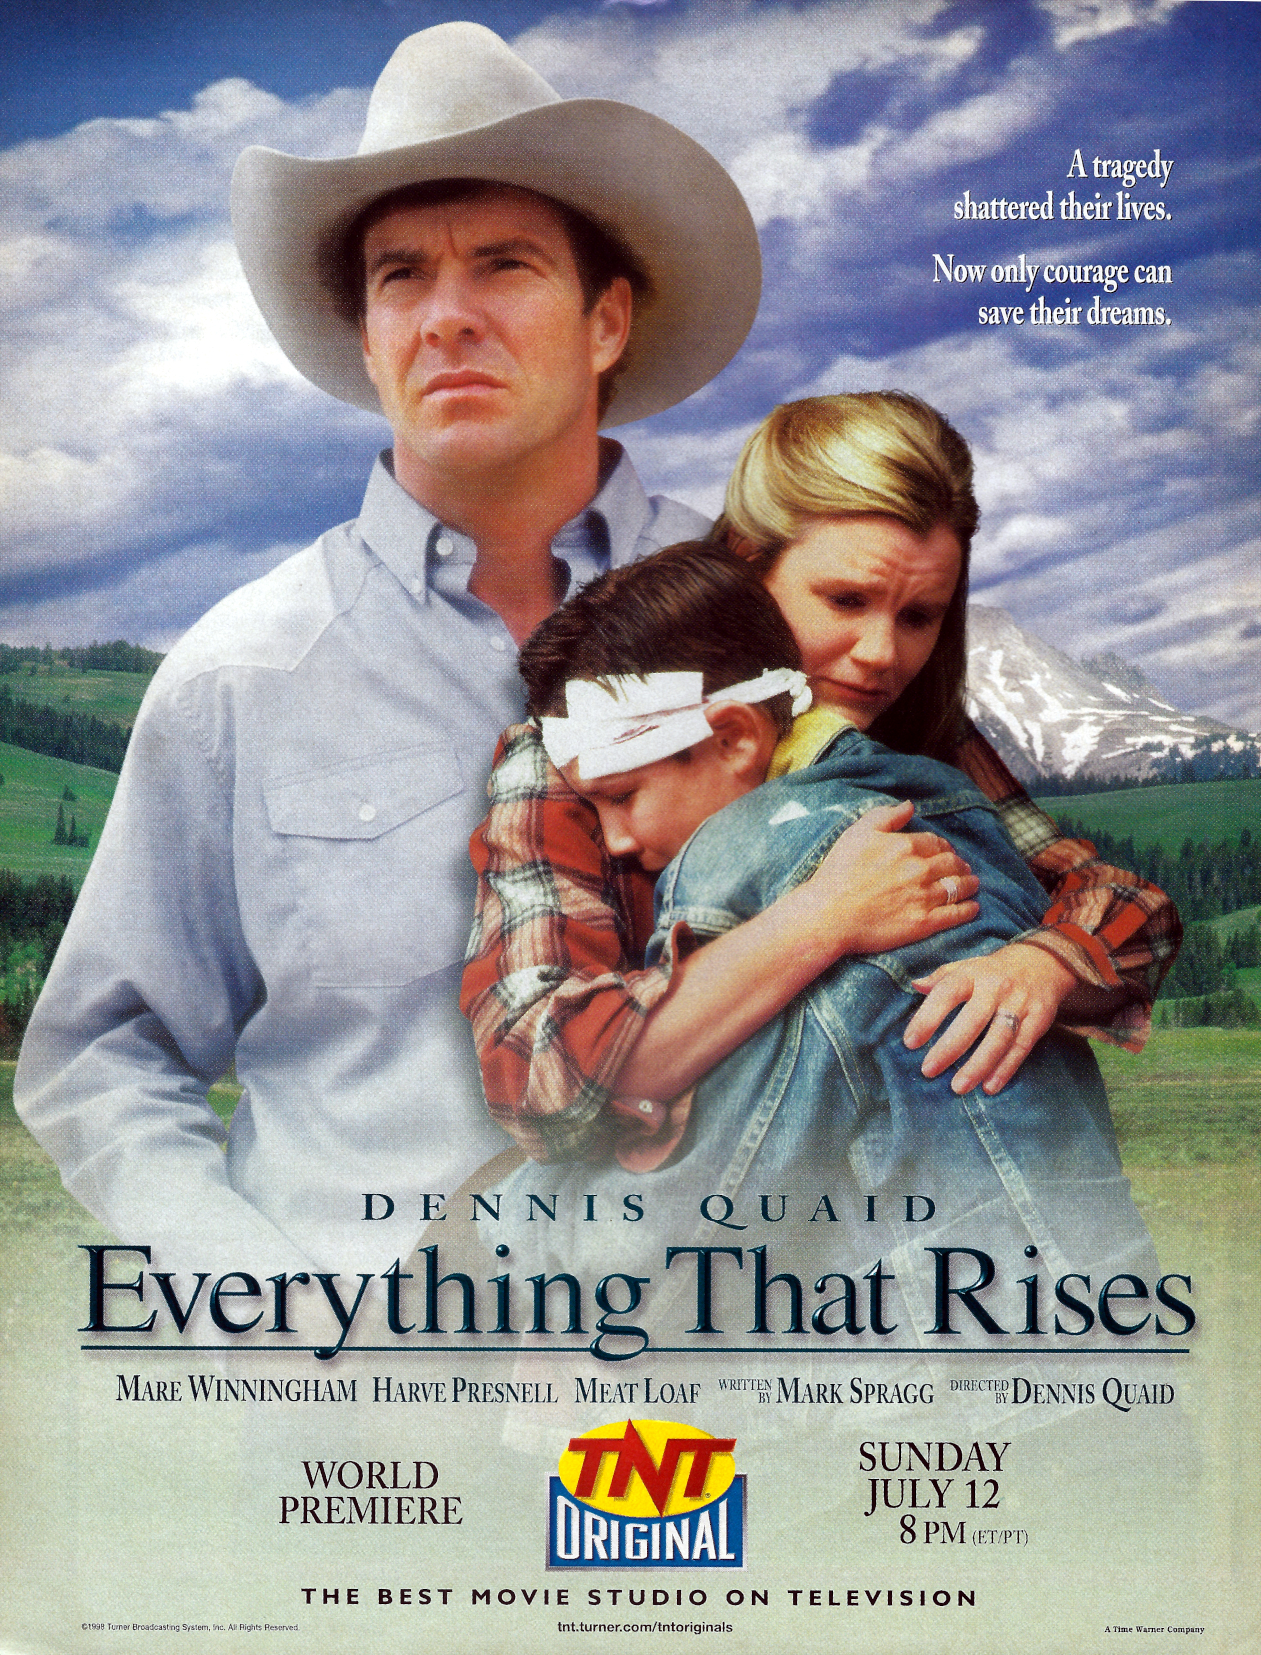 Everything That Rises (1998) starring Dennis Quaid on DVD on DVD